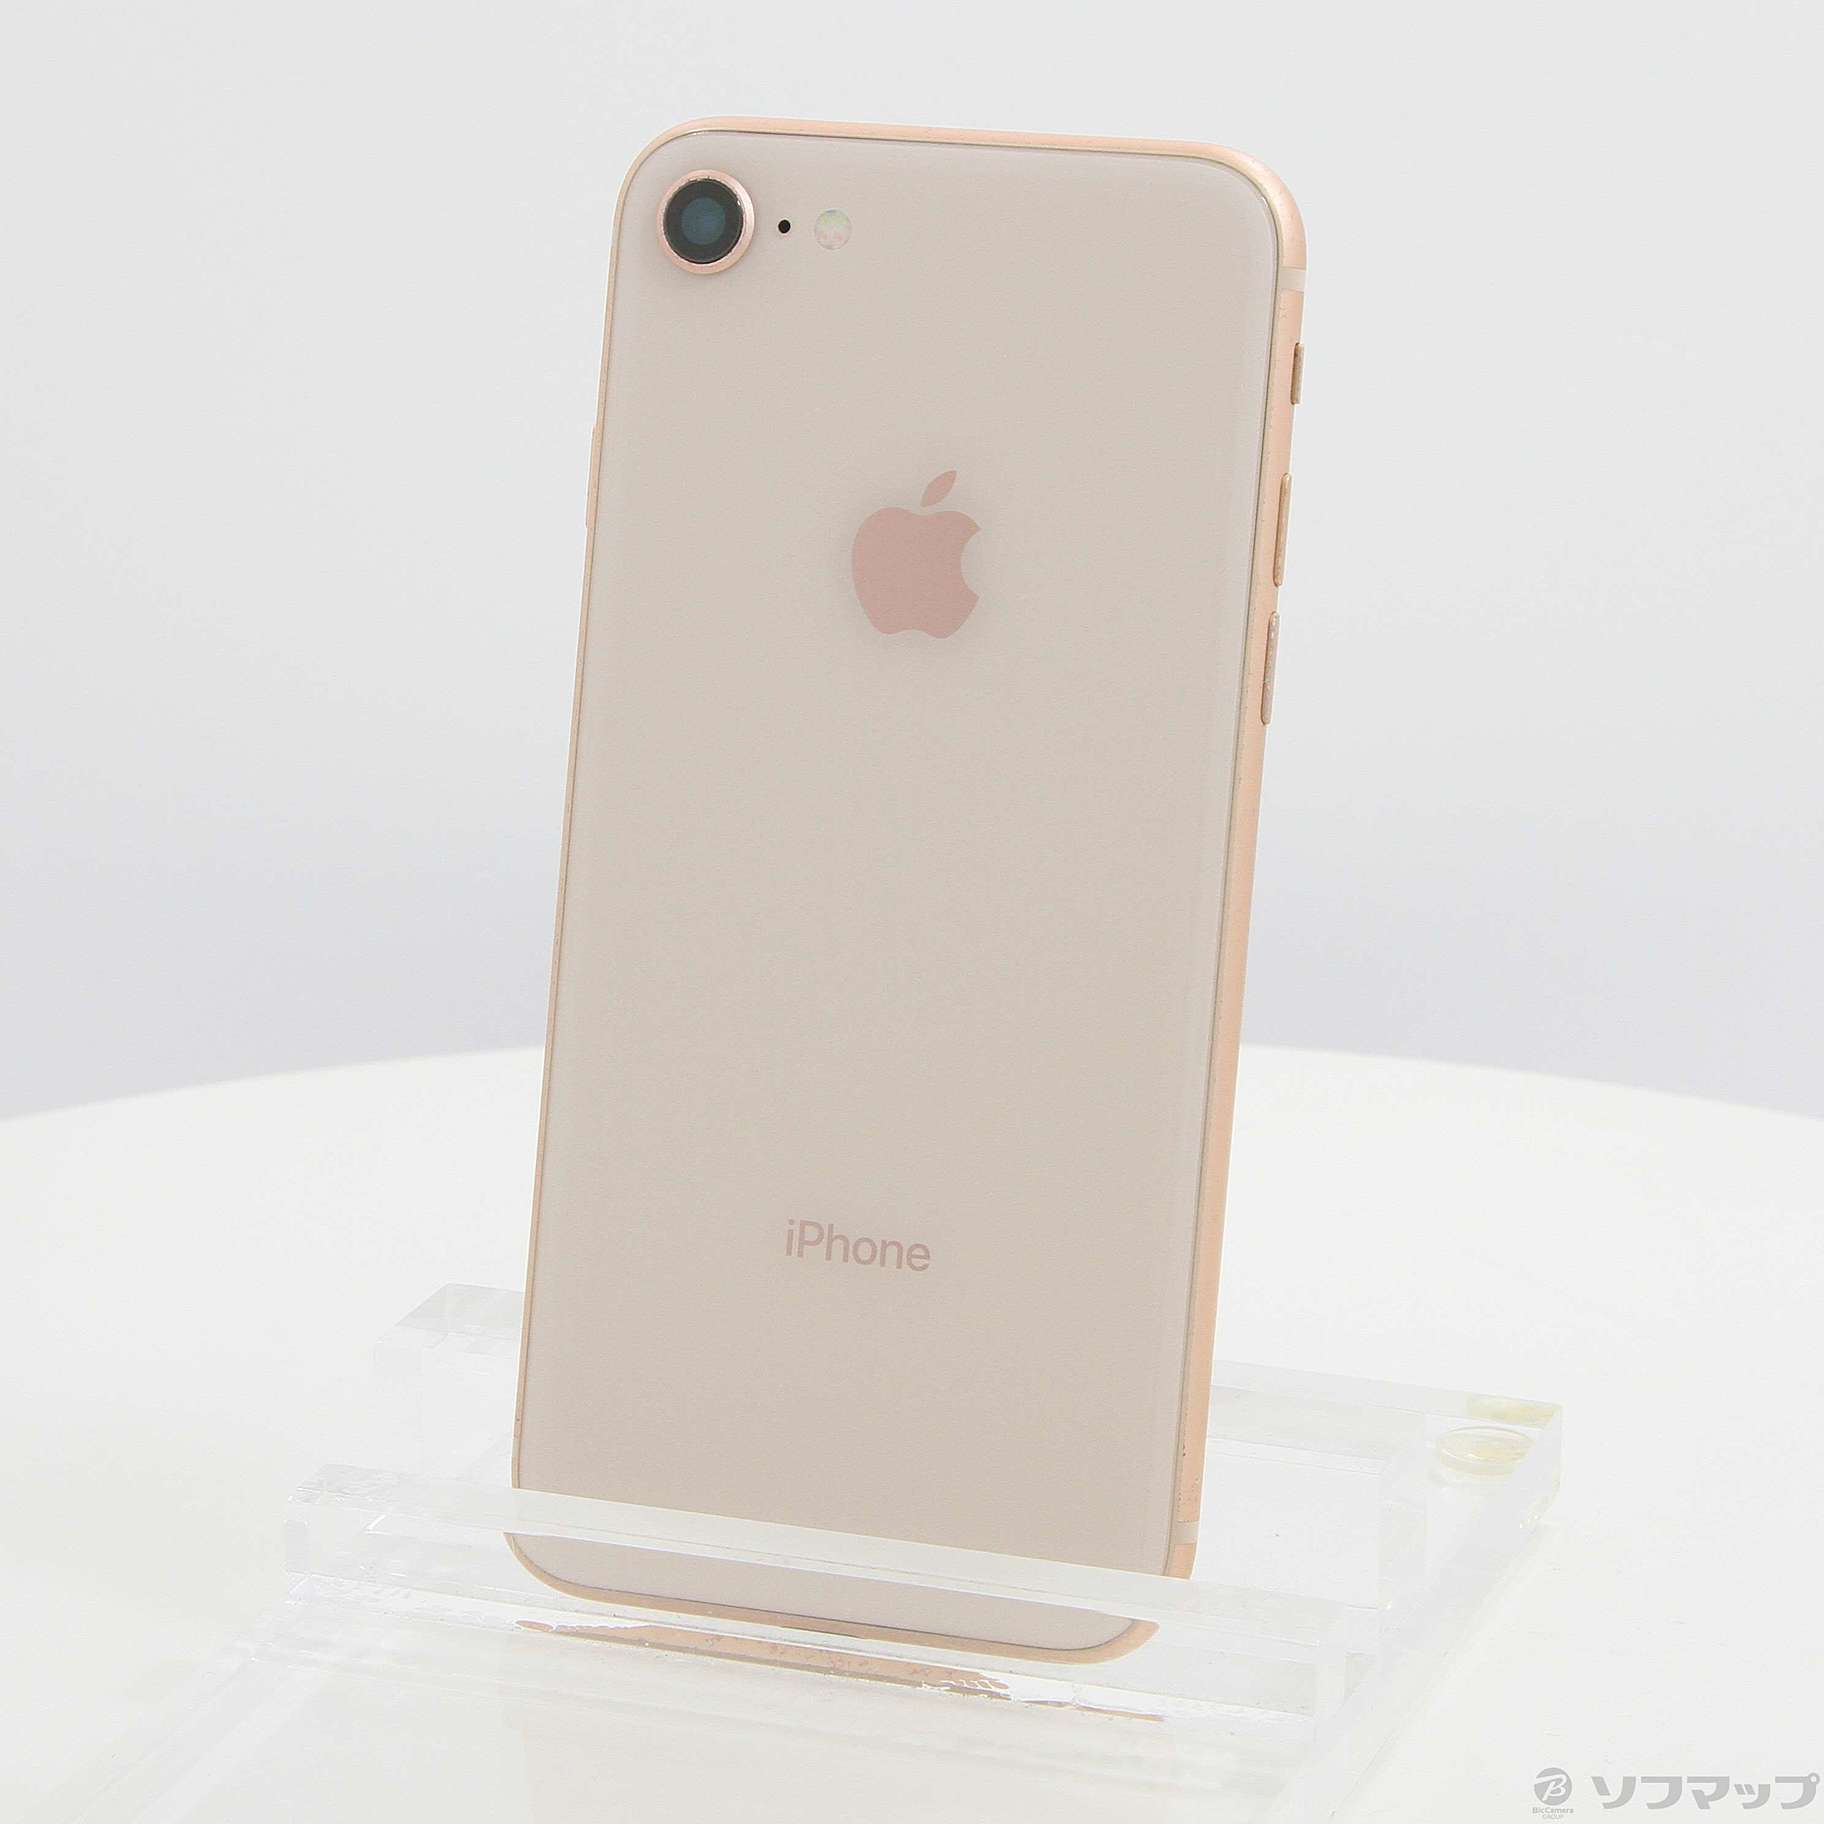 iPhone 7 Plus Rose Gold 256 GB Softbank - スマートフォン本体